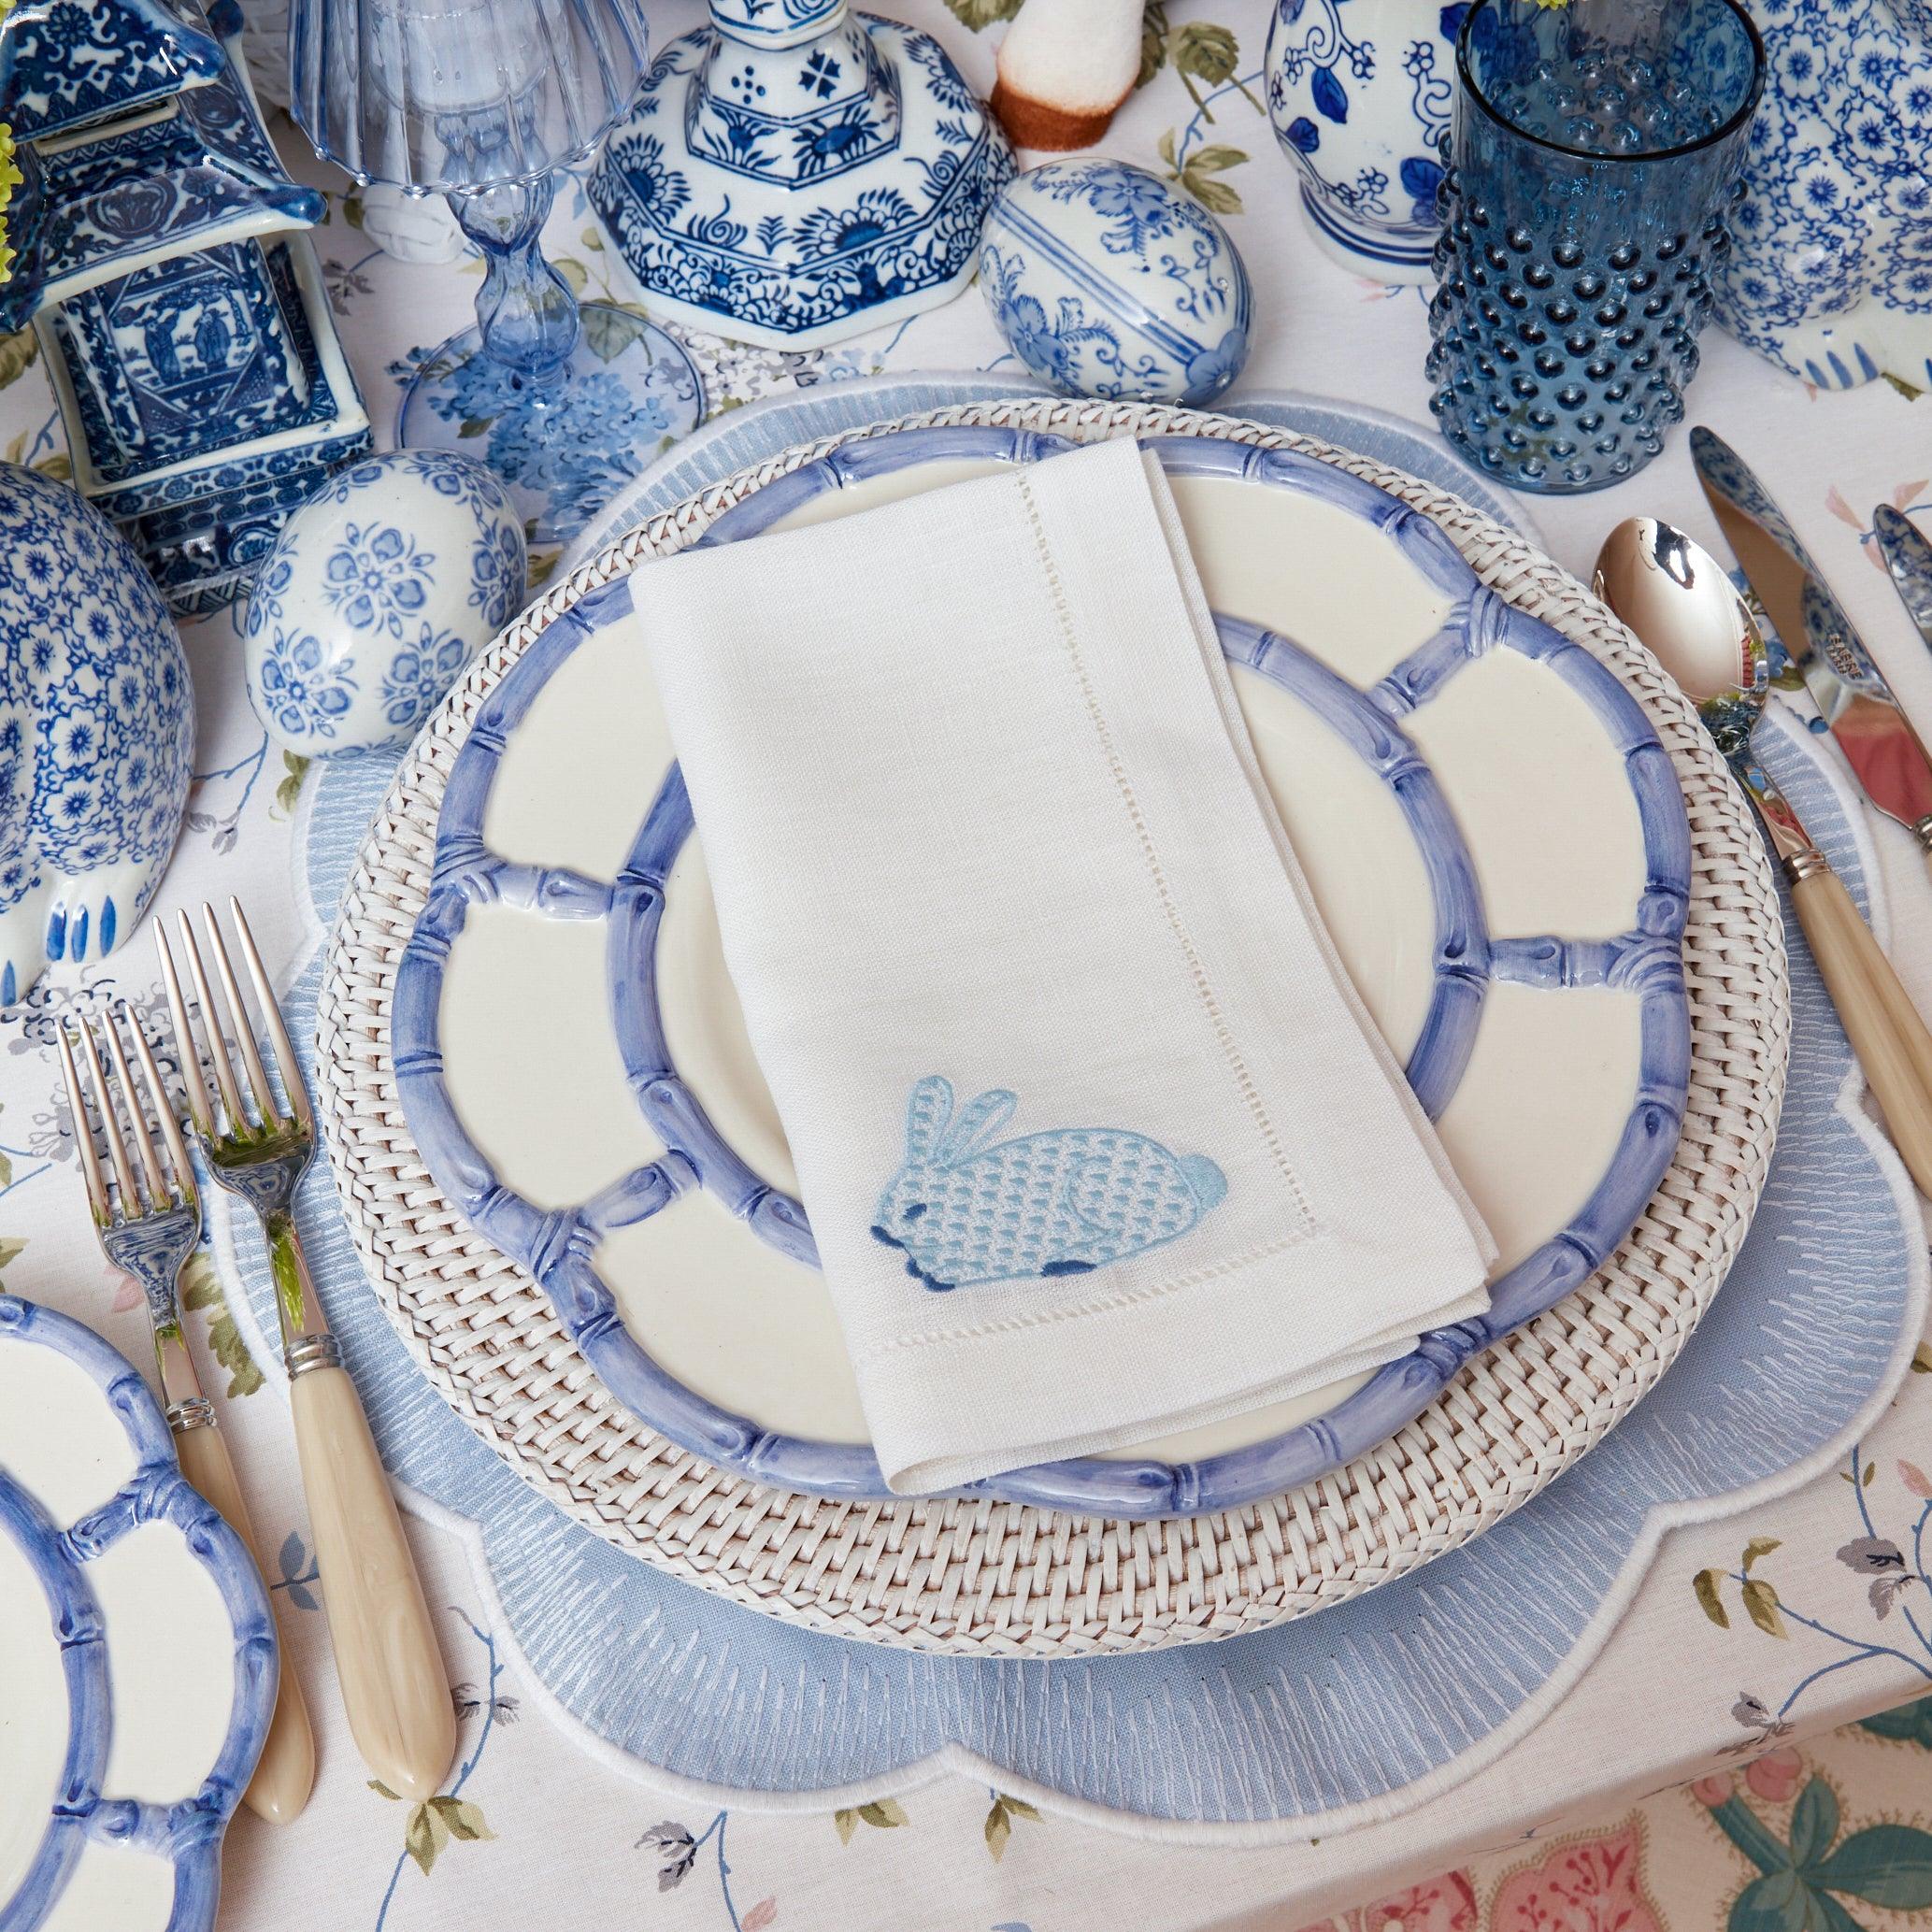 All Cotton and Linen Cloth Napkins - Linen Dinner Napkins - White Linen Napkins Set of 4 - Wedding Table Napkins - Blue Linen Napkins - Orta Linen